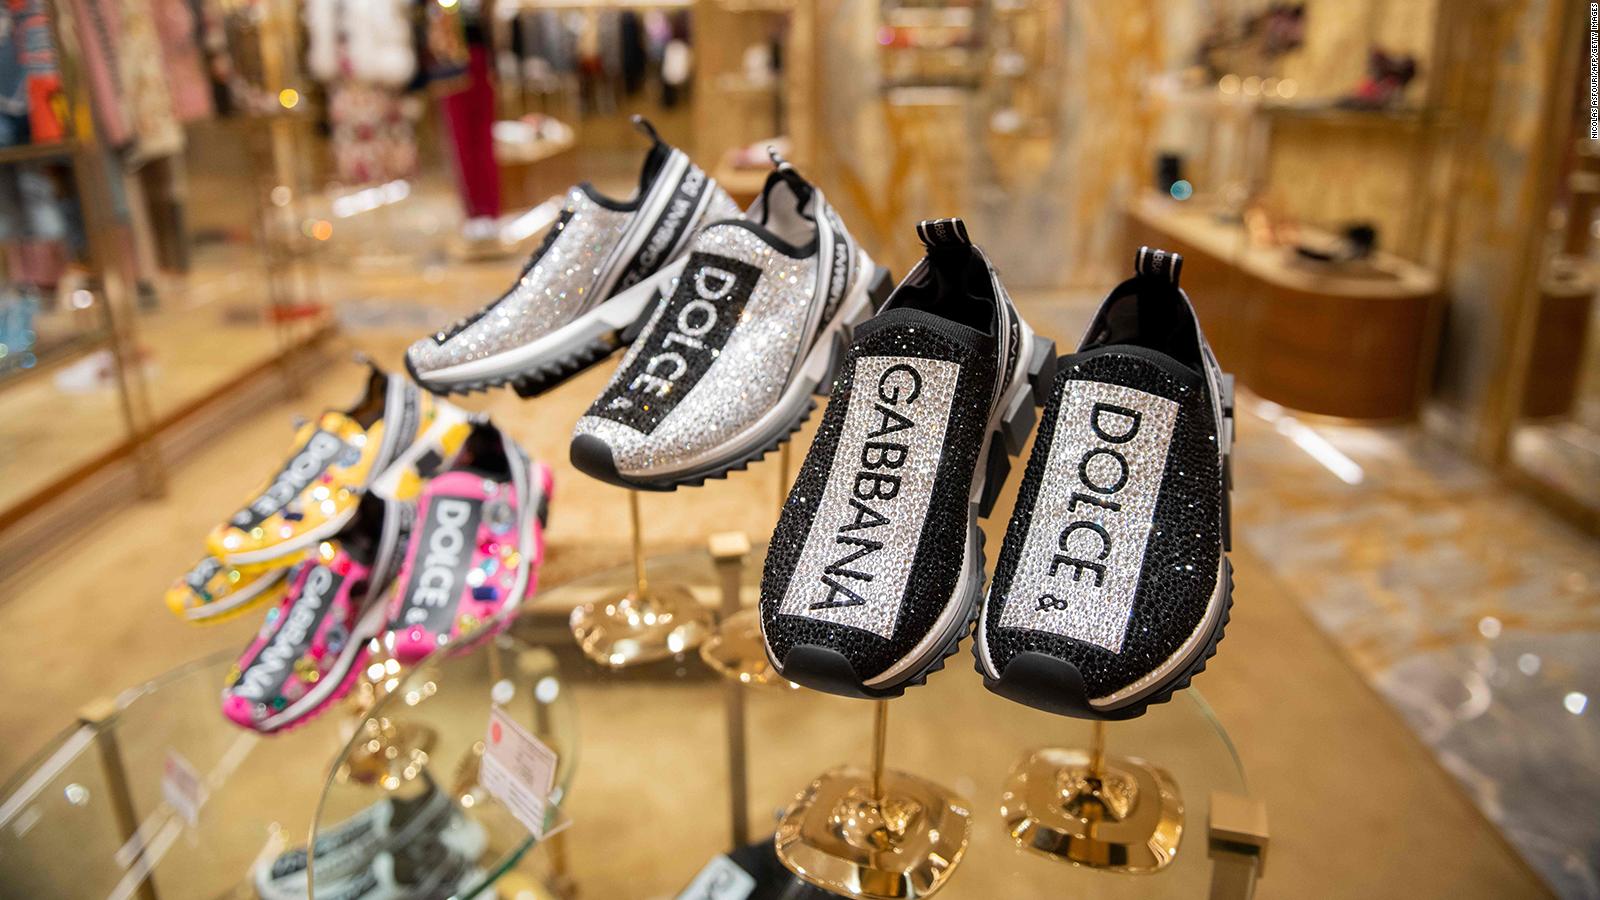 The Dolce & Gabbana Karen Mok backlash shows label is still